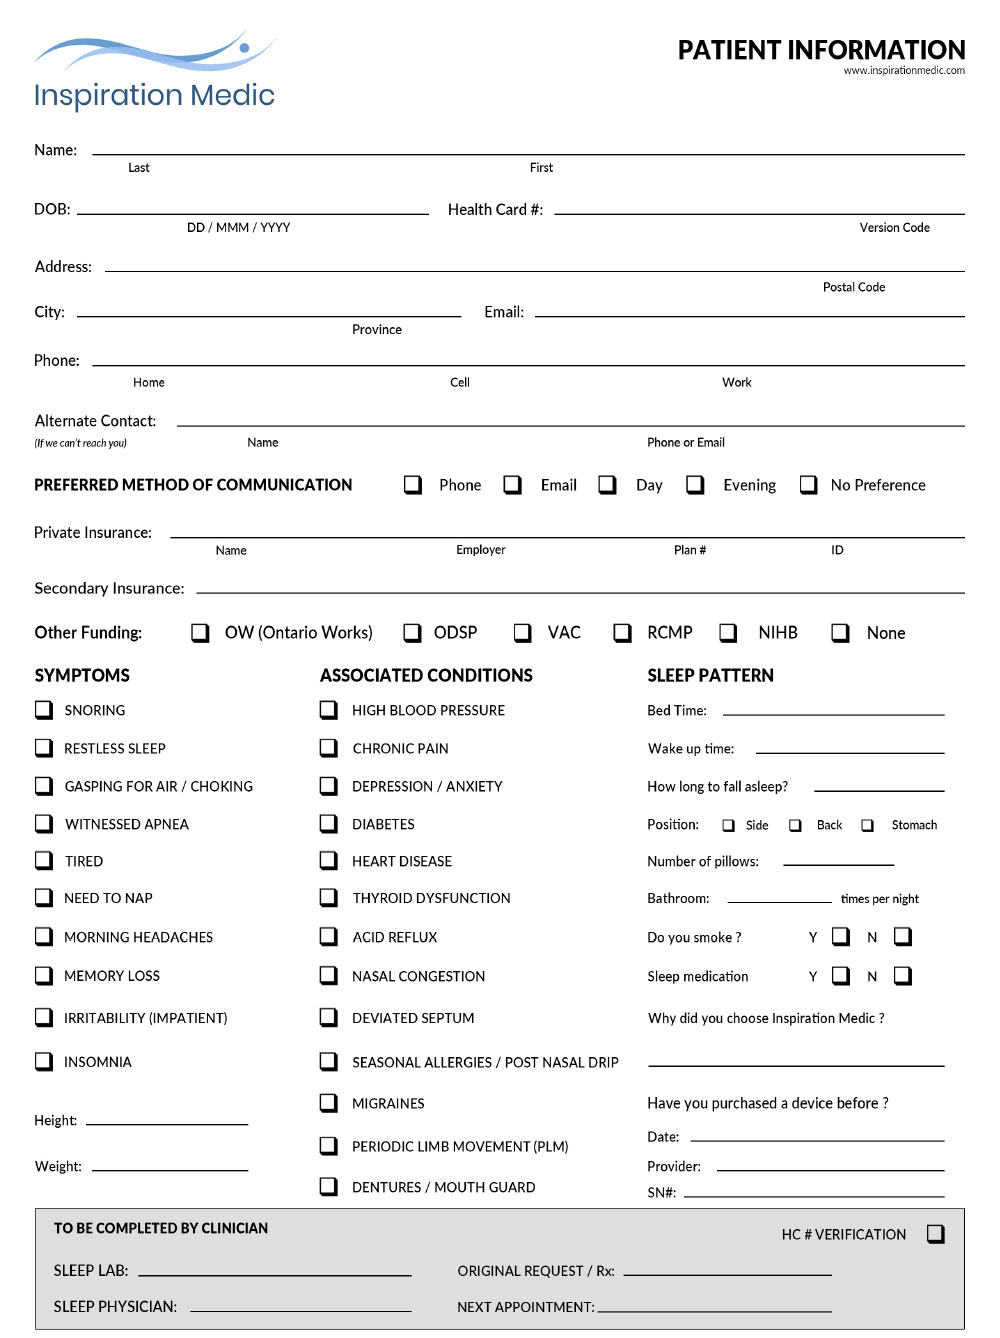 English Patient Information Form - Inspiration Medic